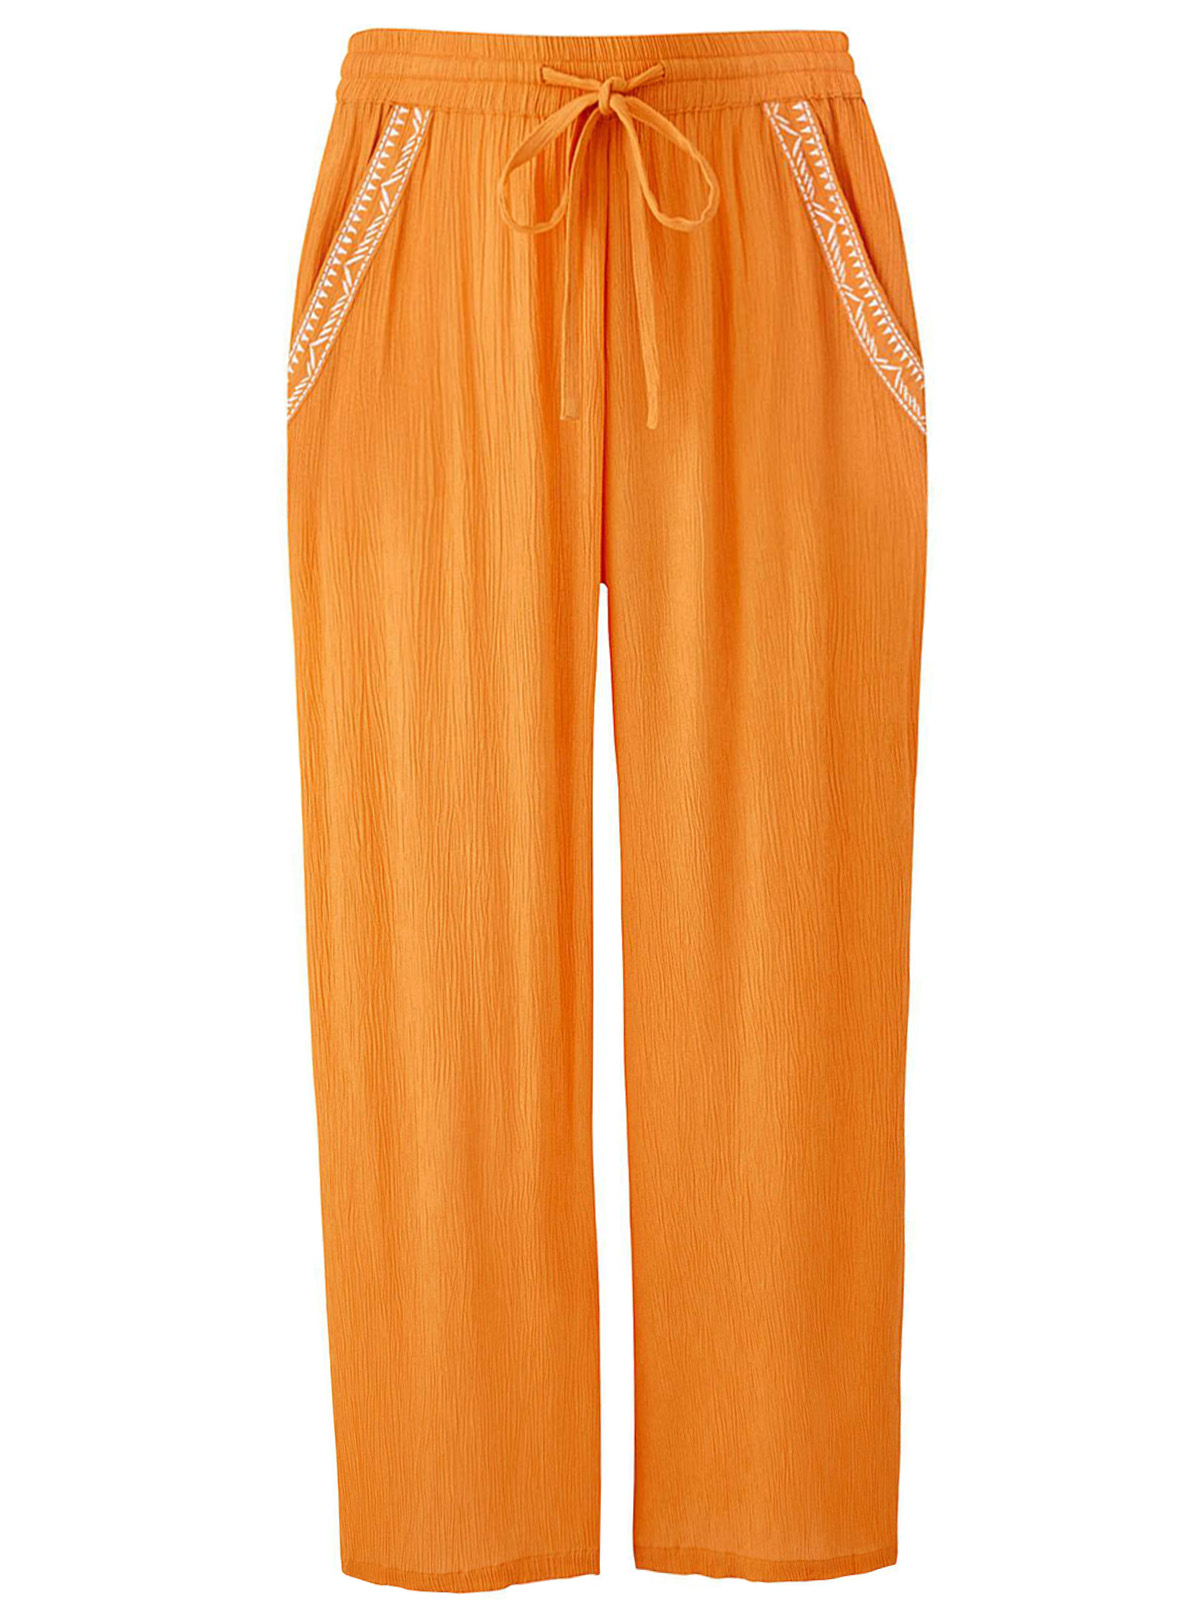 Buy White Pants for Women by Saffron Threads Online | Ajio.com